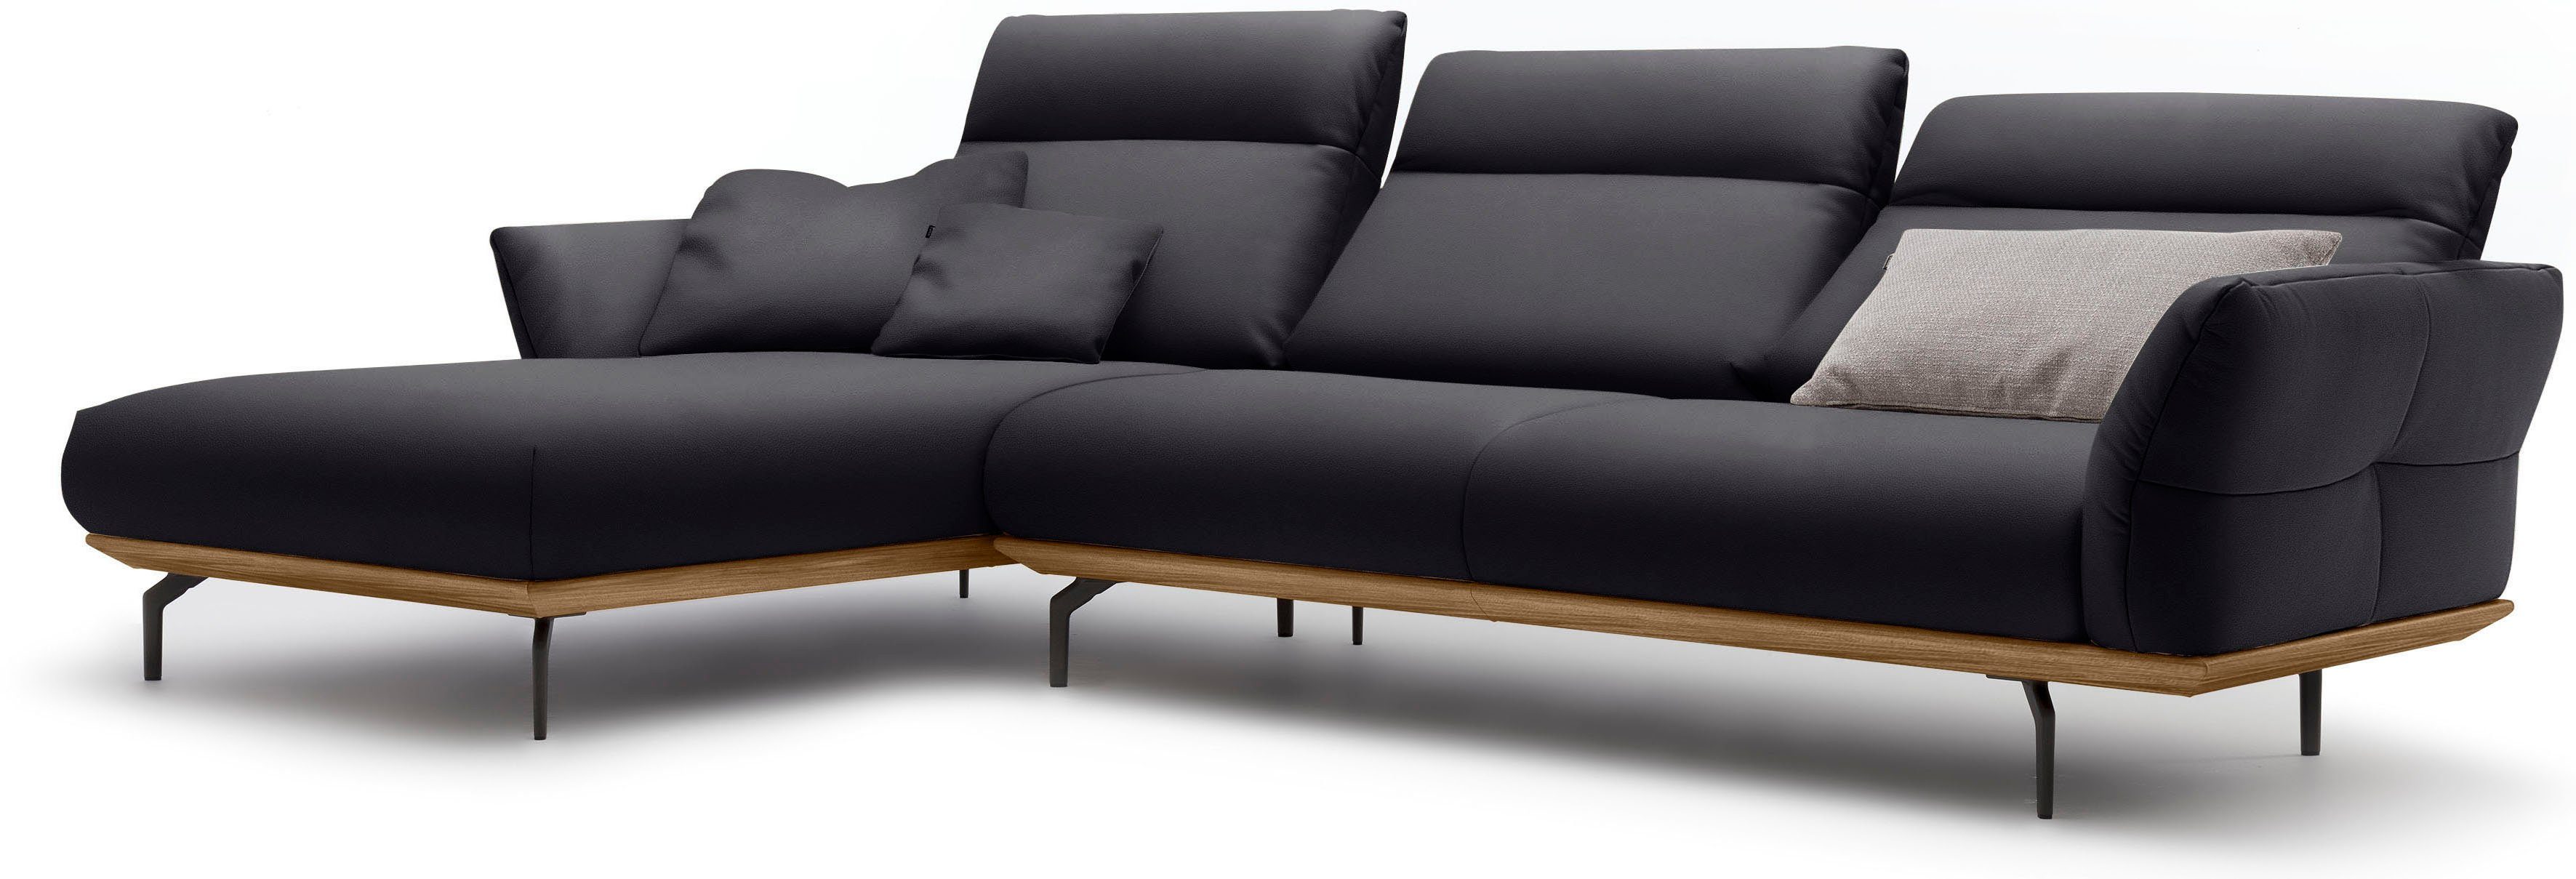 hülsta sofa Ecksofa hs.460, Sockel in Umbragrau, Nussbaum, in Winkelfüße cm 318 Breite